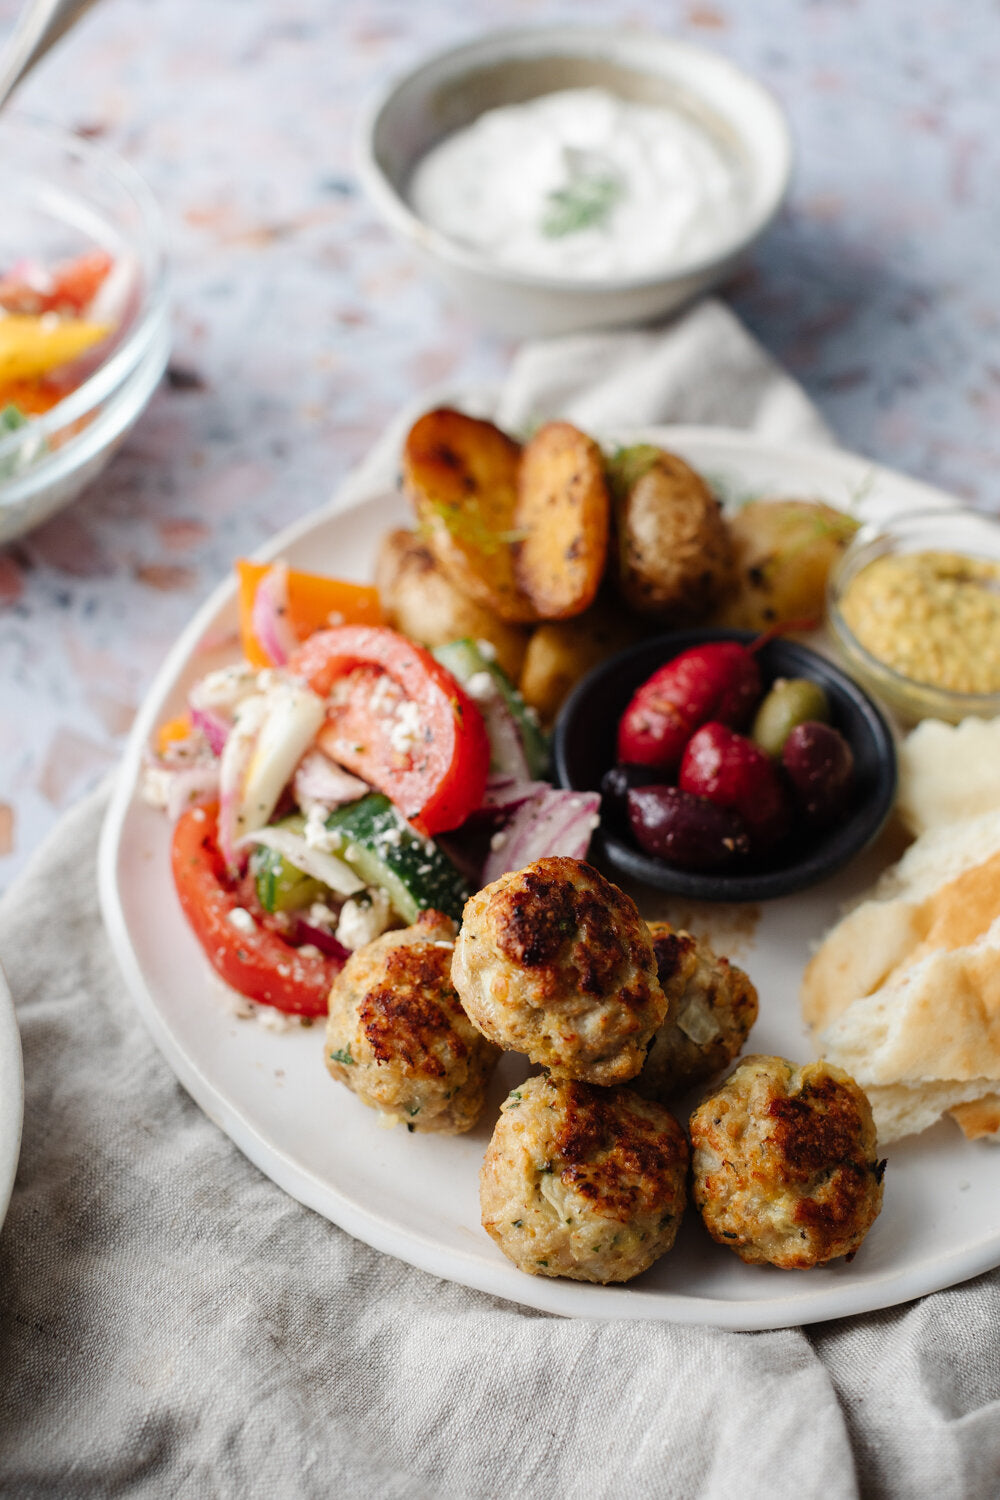 A full greek plate with greek salad, potatoes, olives, and Pan Seared Lemony Greek Turkey Meatballs